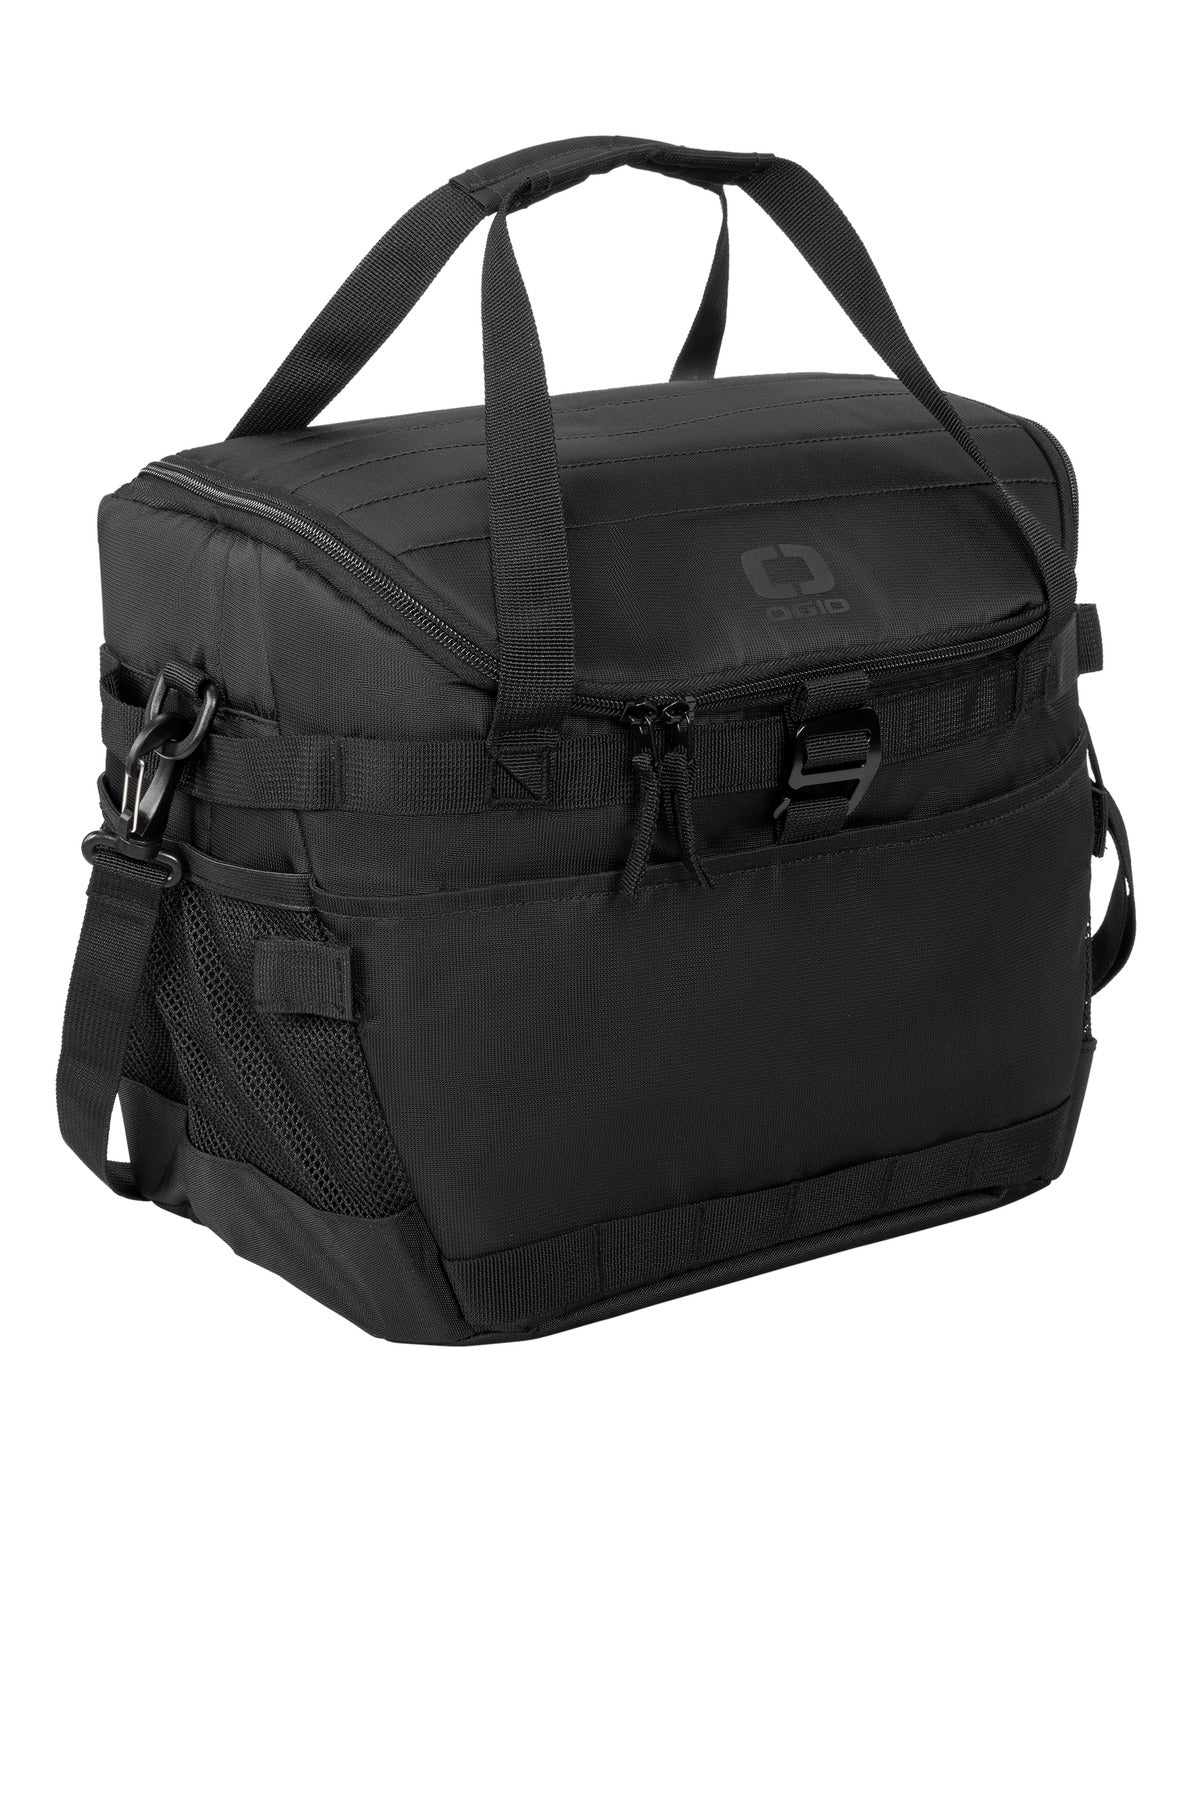 Photo of OGIO Bags 96002  color  Blacktop